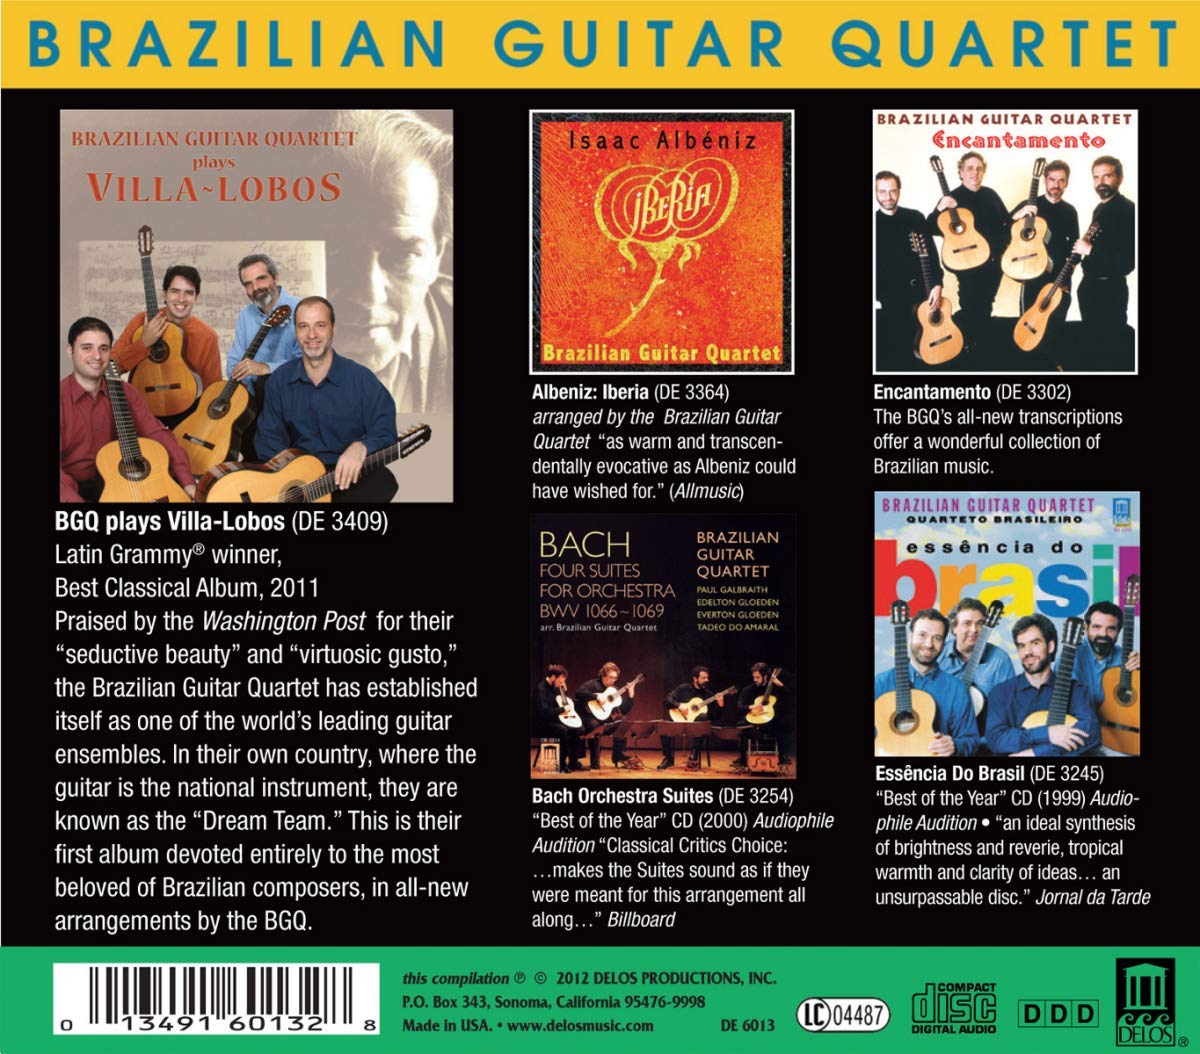 BRAZILIAN GUITAR QUARTET: 1. Villa-Lobos, 2. Essencia do Brasil, 3. Encantamento, 4. Bach: The Orchestral Suites, 5. Isaac Albéniz: Iberia - slide-1